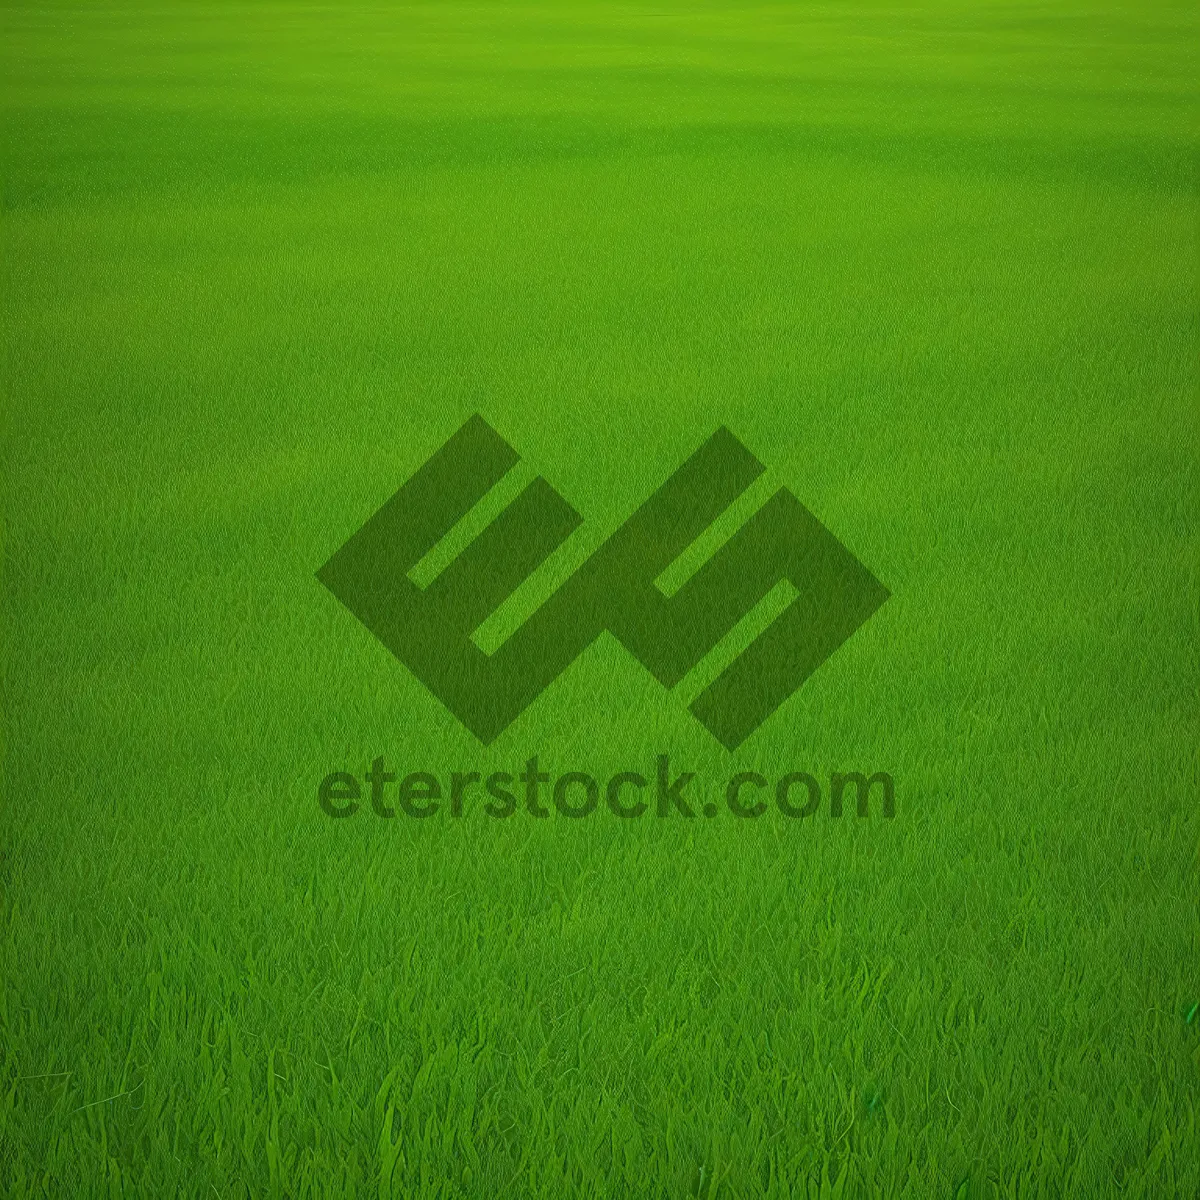 Picture of Verdant Wheatfield, Nature's Lush Green Carpet